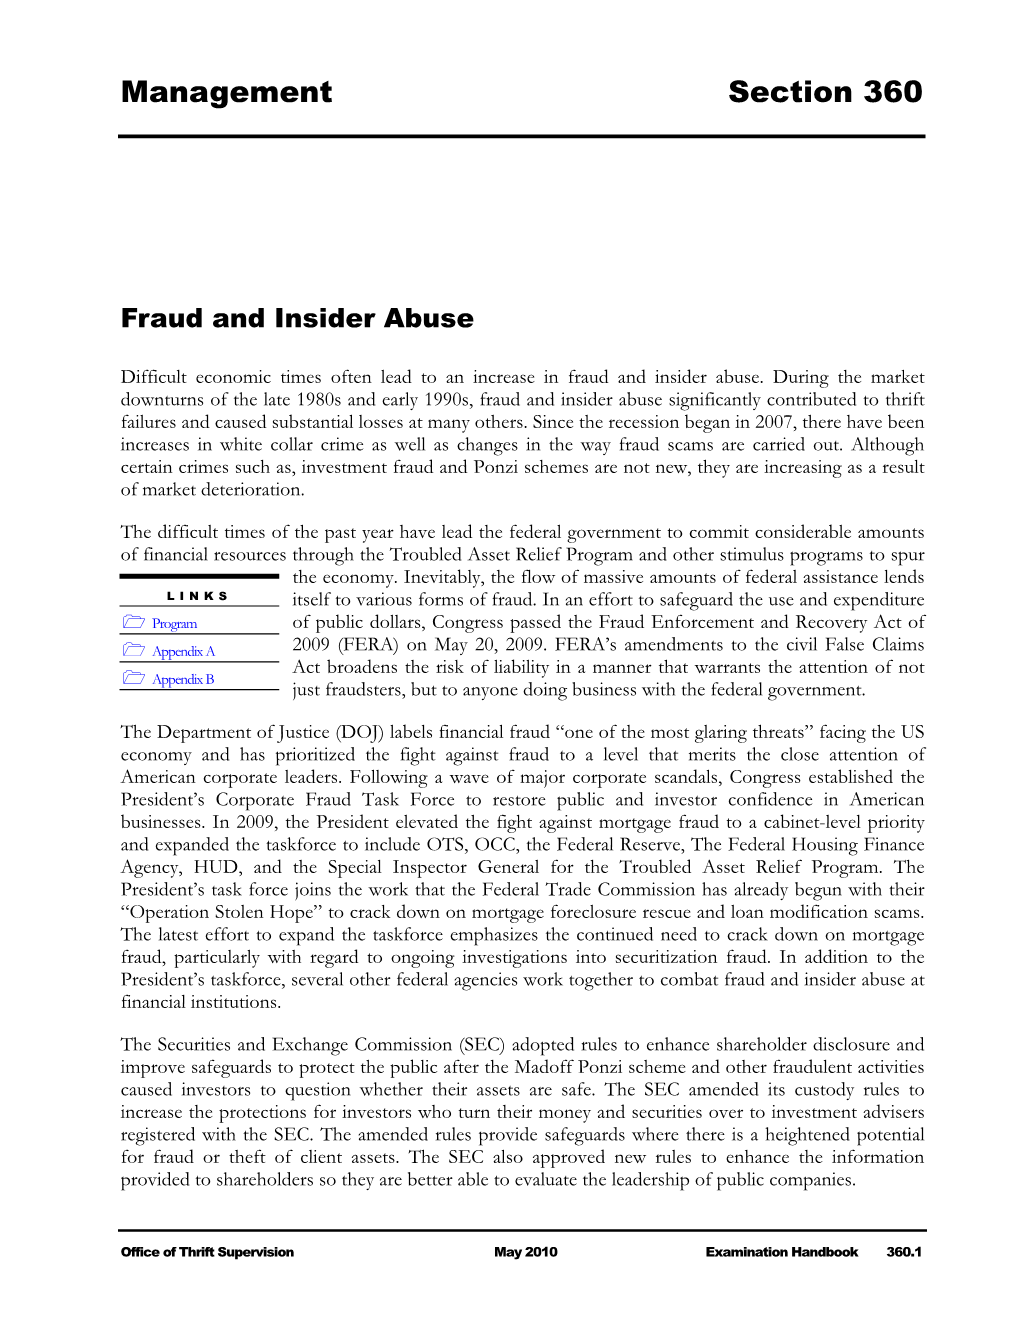 Exam Handbook 360, Fraud and Insider Abuse, June 14, 2010